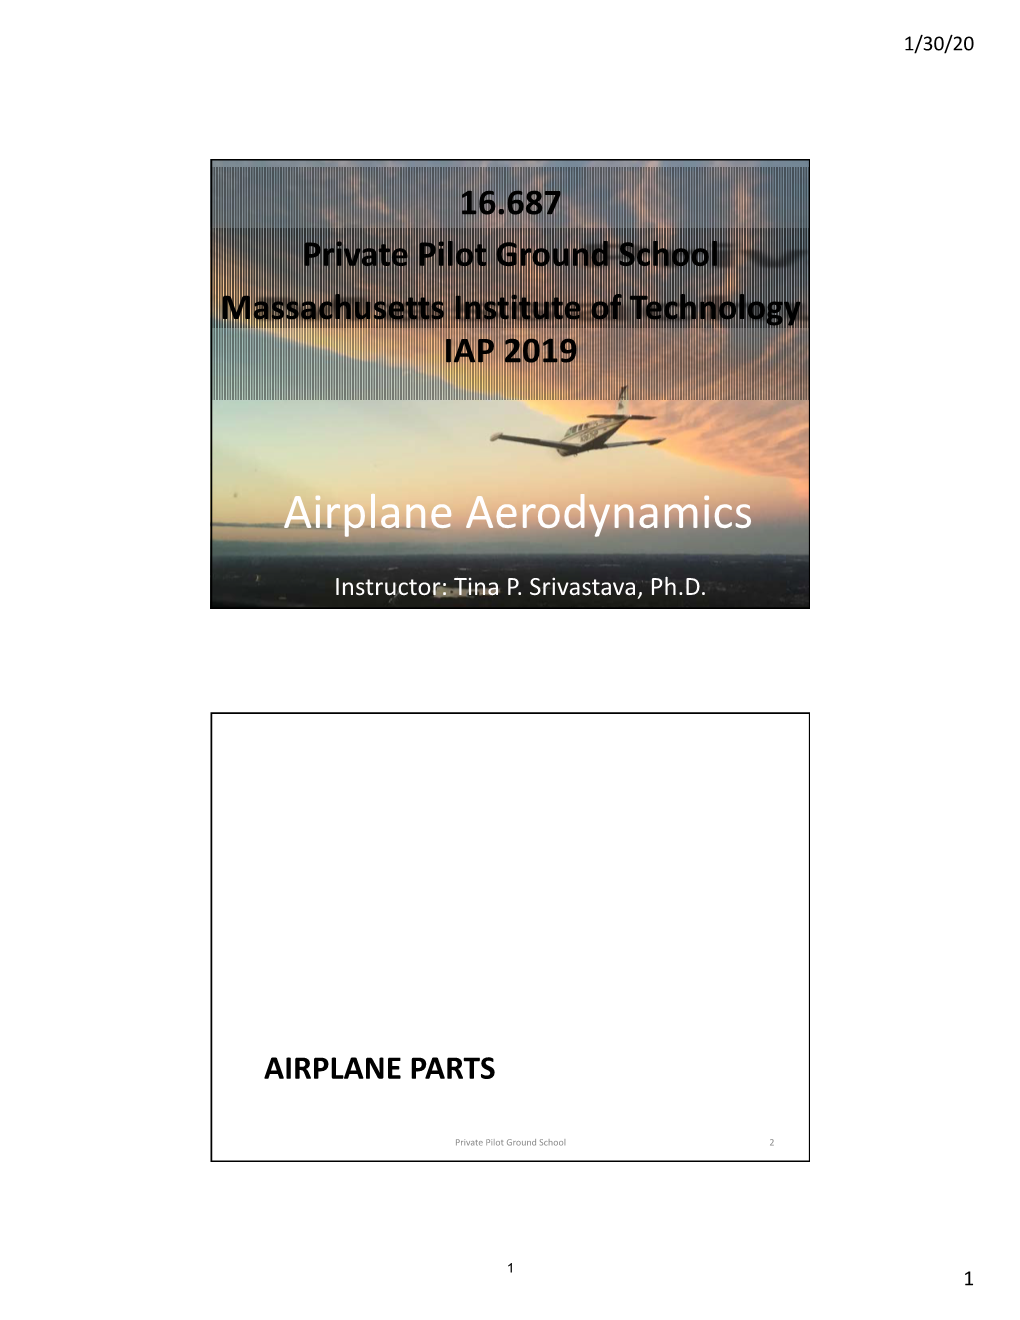 MIT16 687IAP19 Lec02, Airplane Aerodynamics